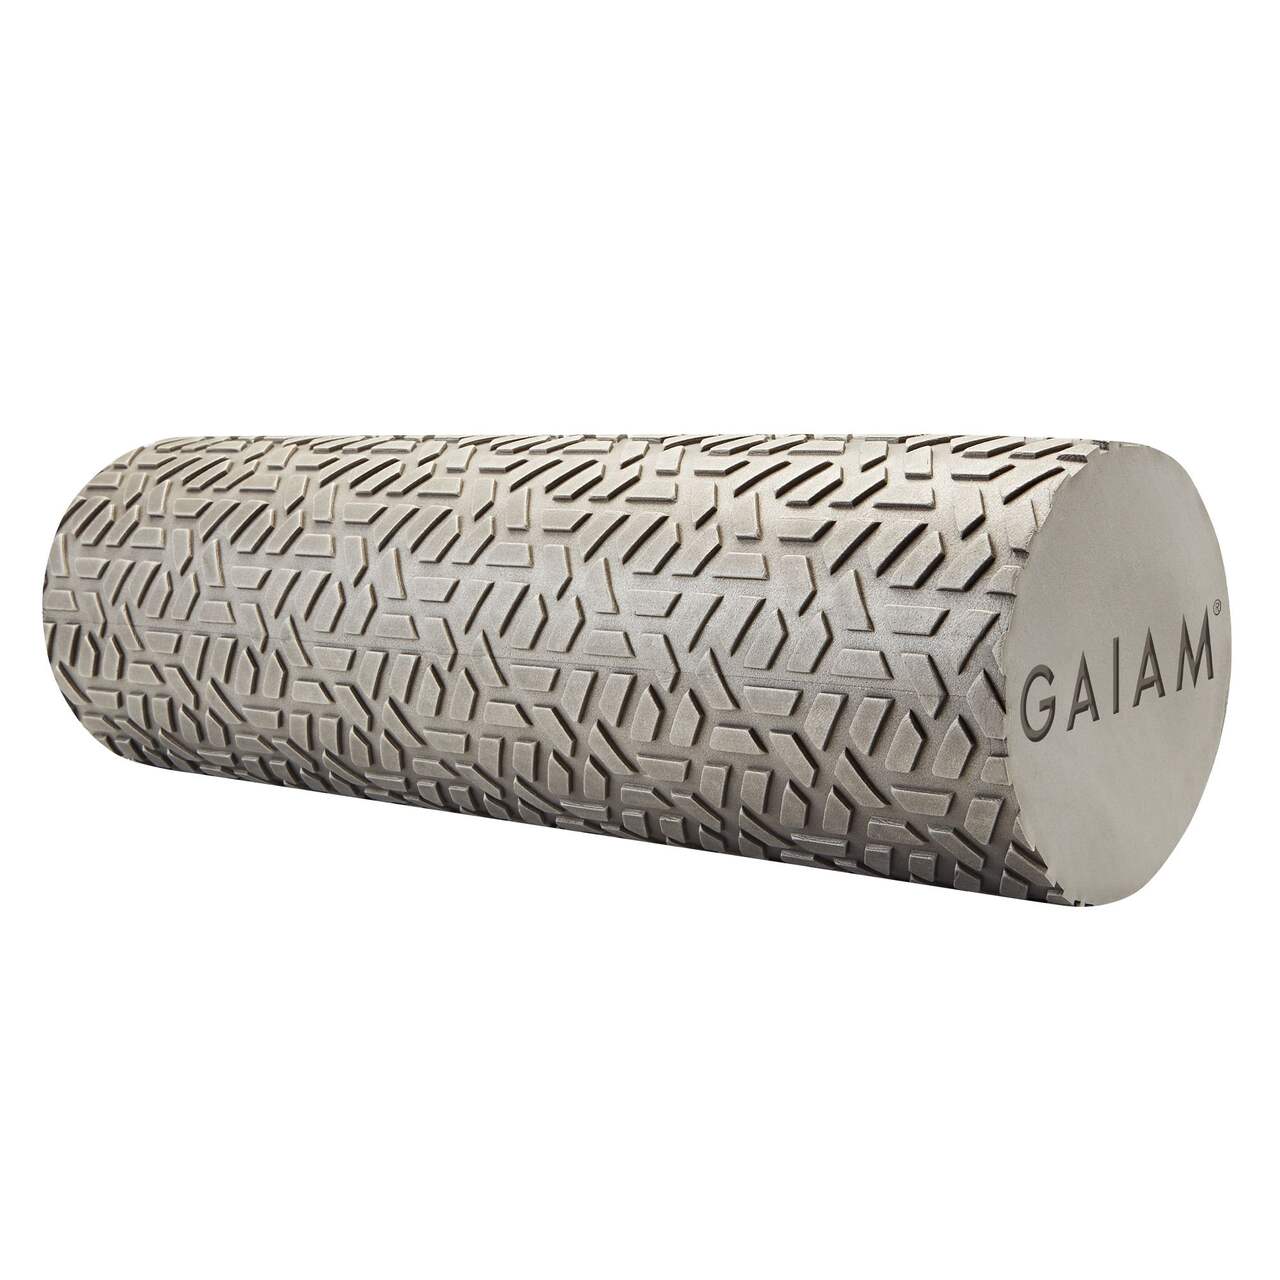 Gaiam Restore Deep Tissue Foam Roller, 13-in